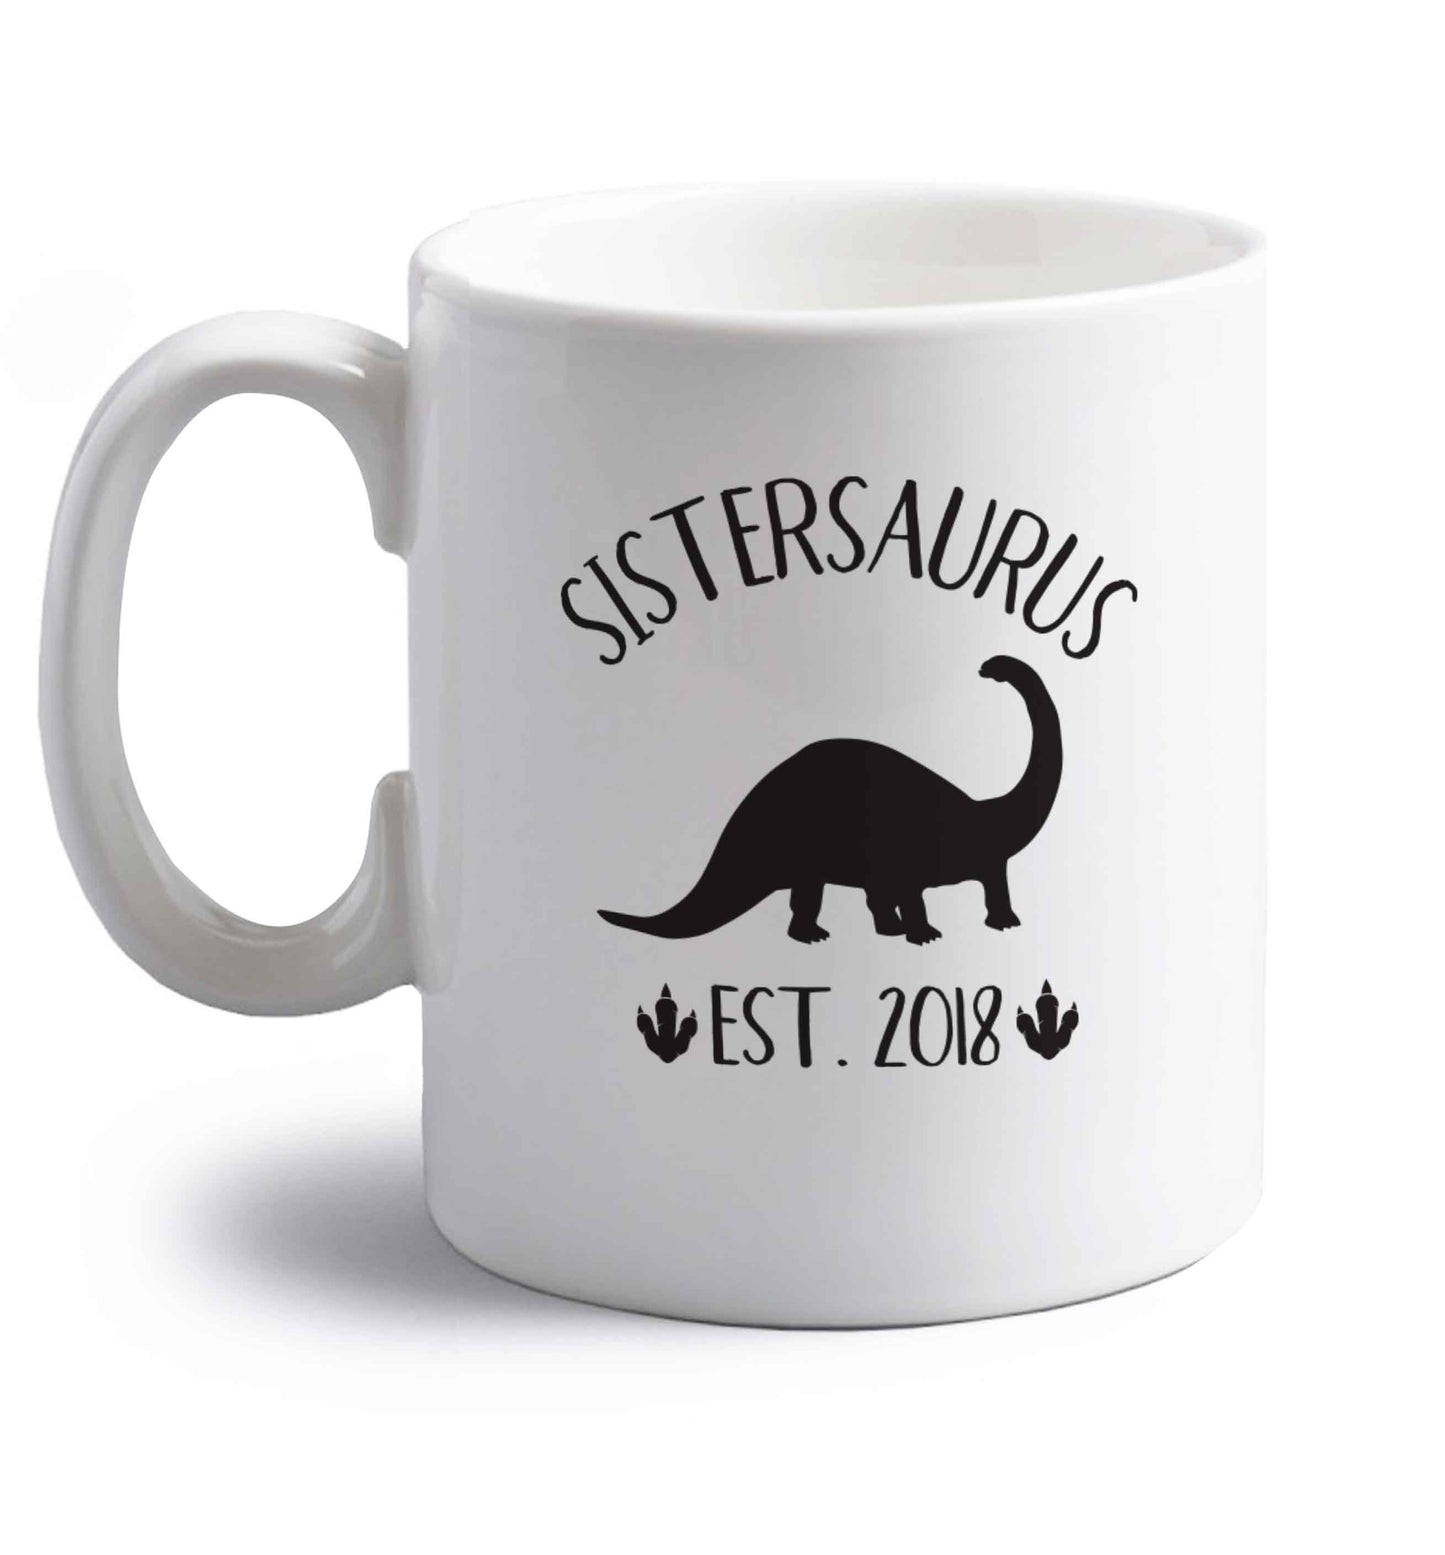 Personalised sistersaurus since (custom date) right handed white ceramic mug 